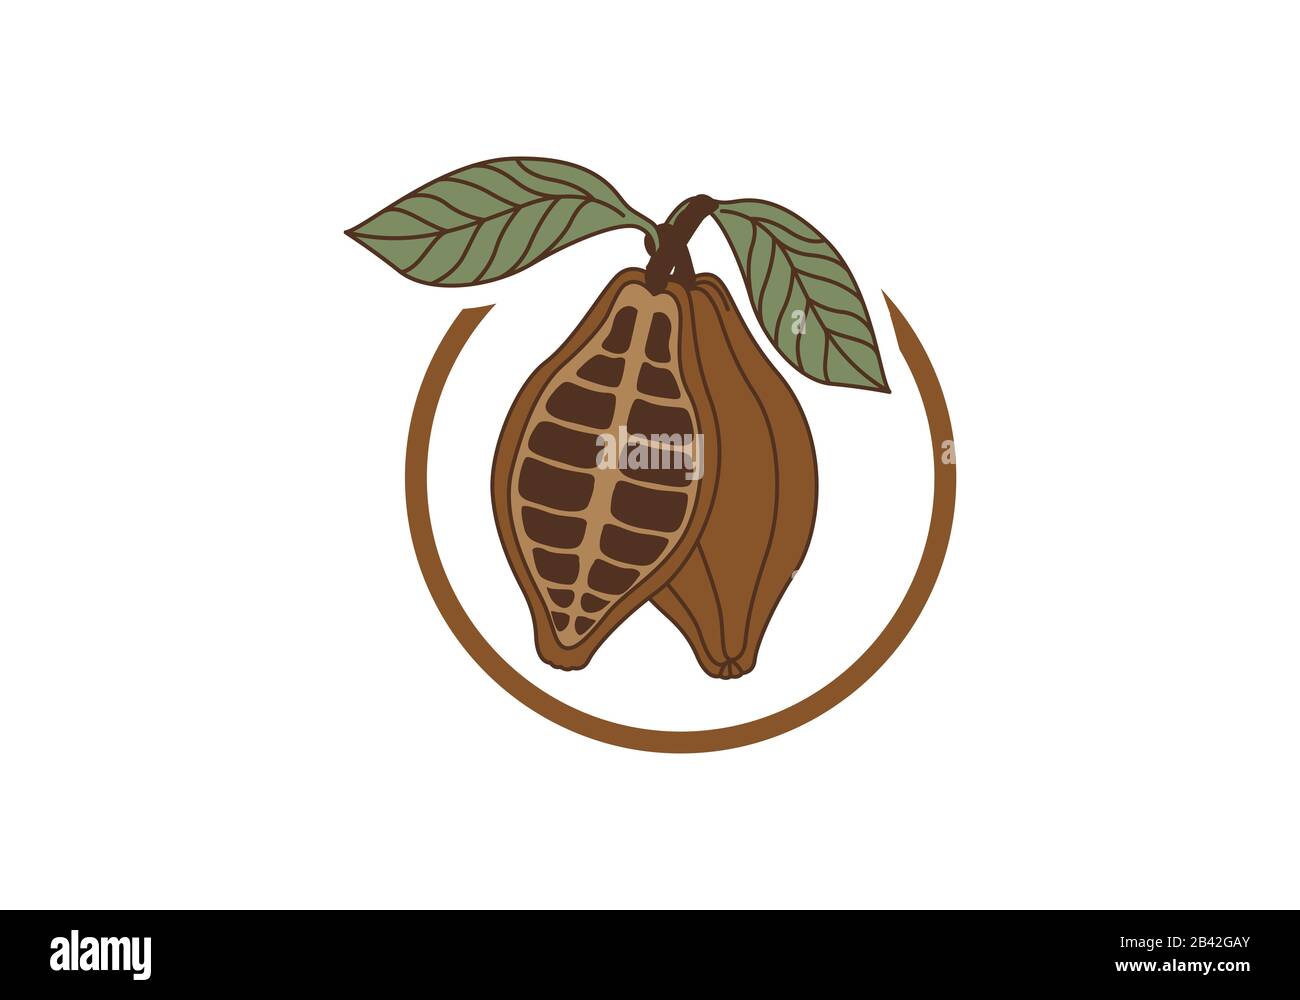 Walnut logo sign. Isolated walnut on white background Stock Vector